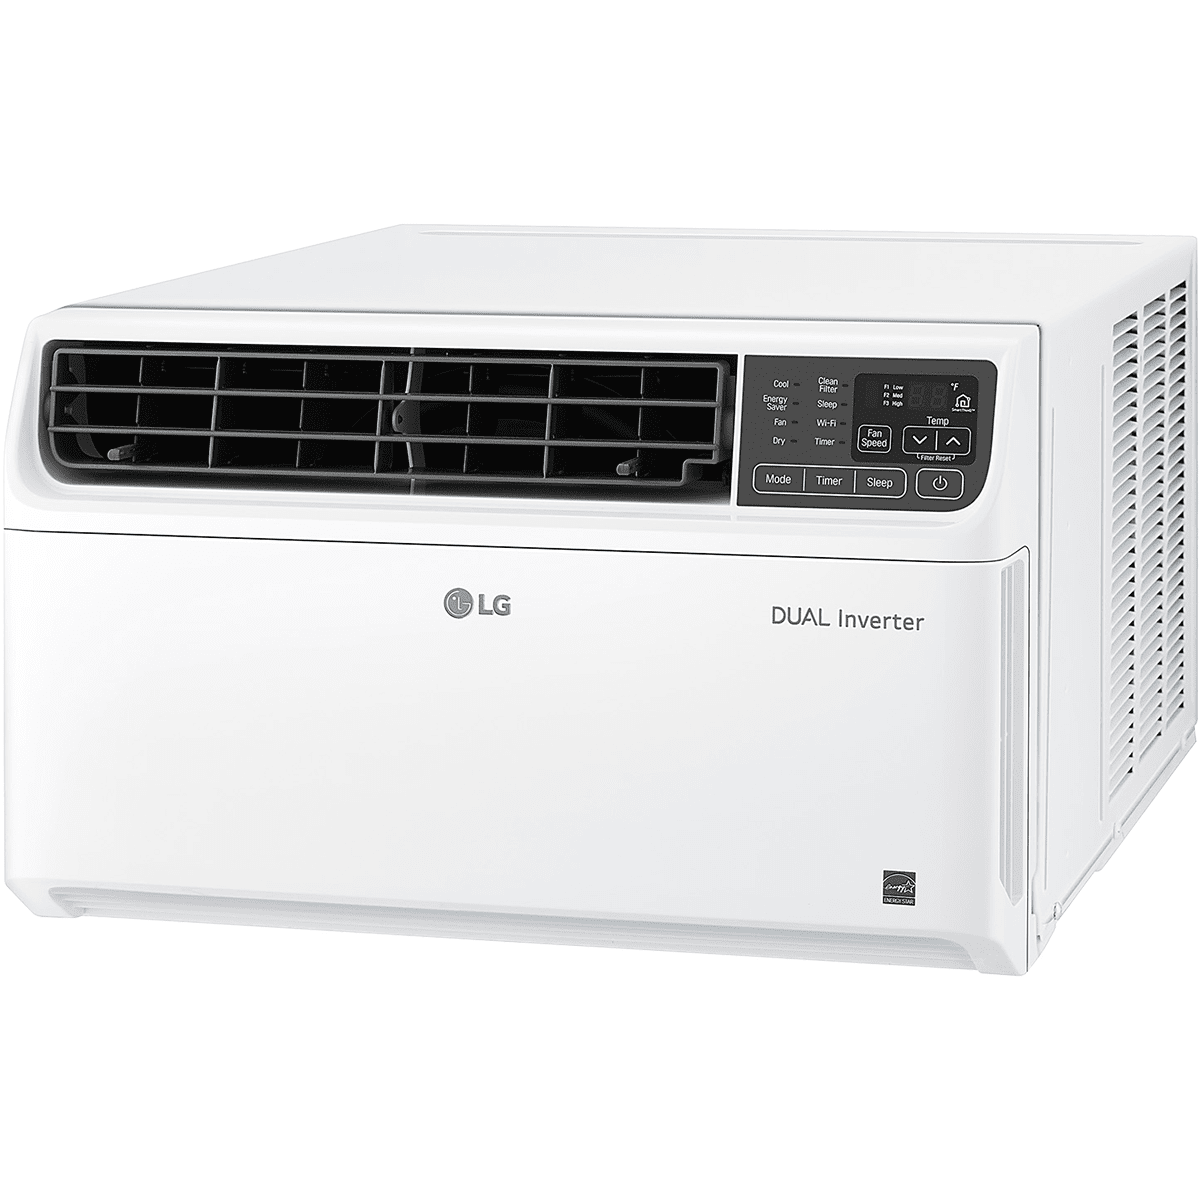 LG 12,000 BTU Dual Inverter Smart Wi-Fi Window Air Conditioner